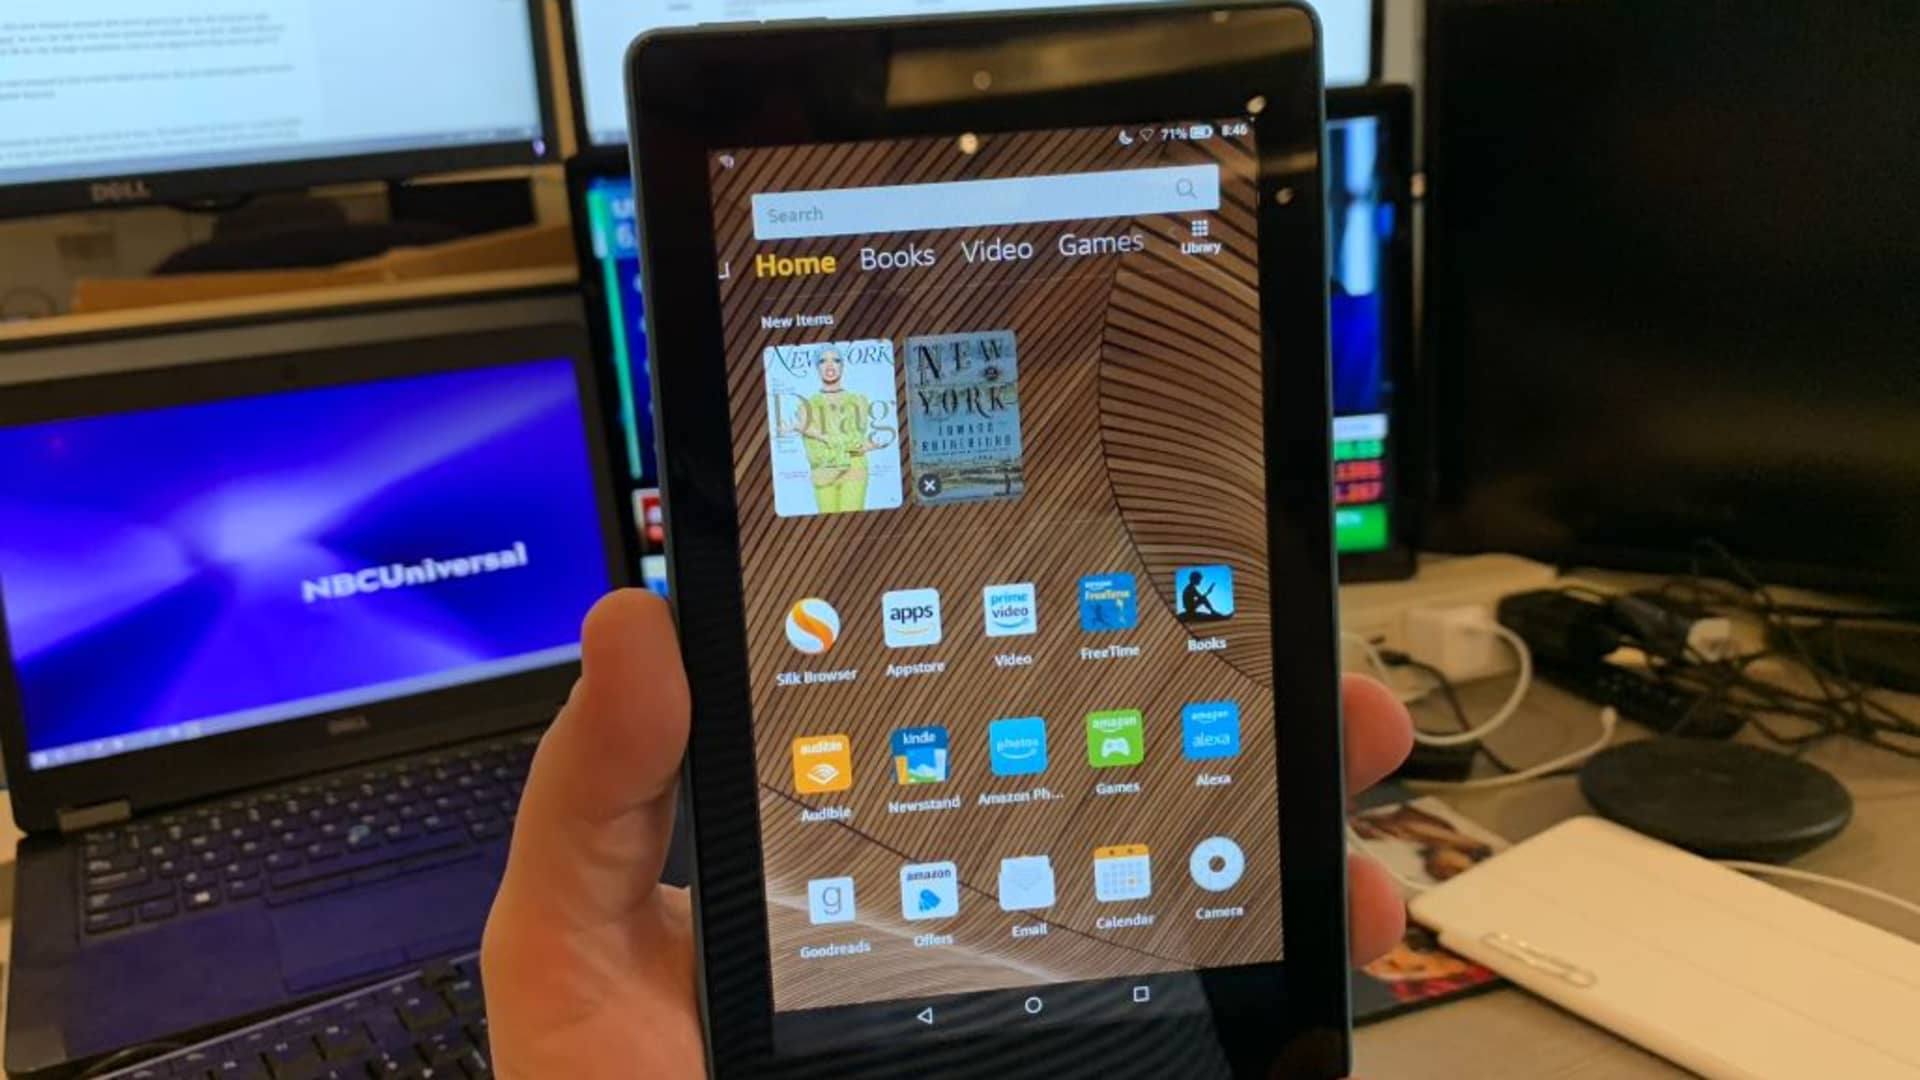 Amazon Fire 7 2019 tablet review: skip it, buy Fire HD8 instead